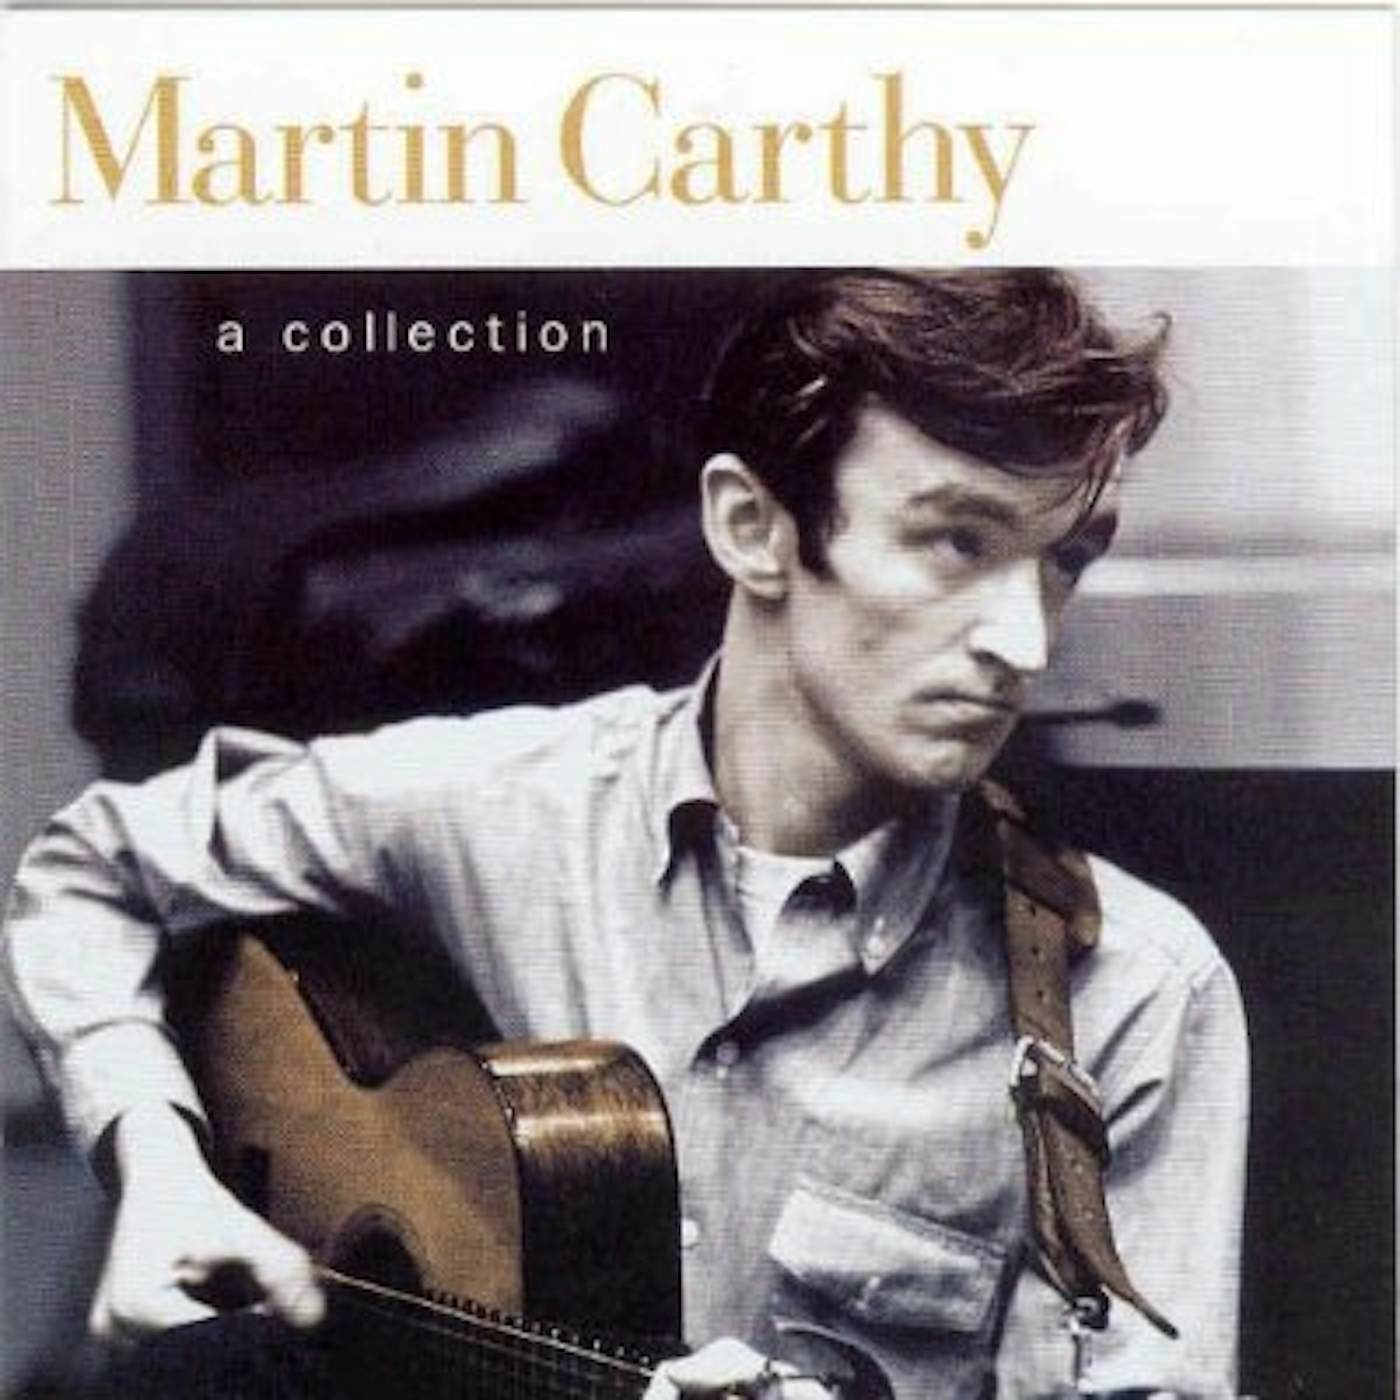 Martin Carthy COLLECTION CD